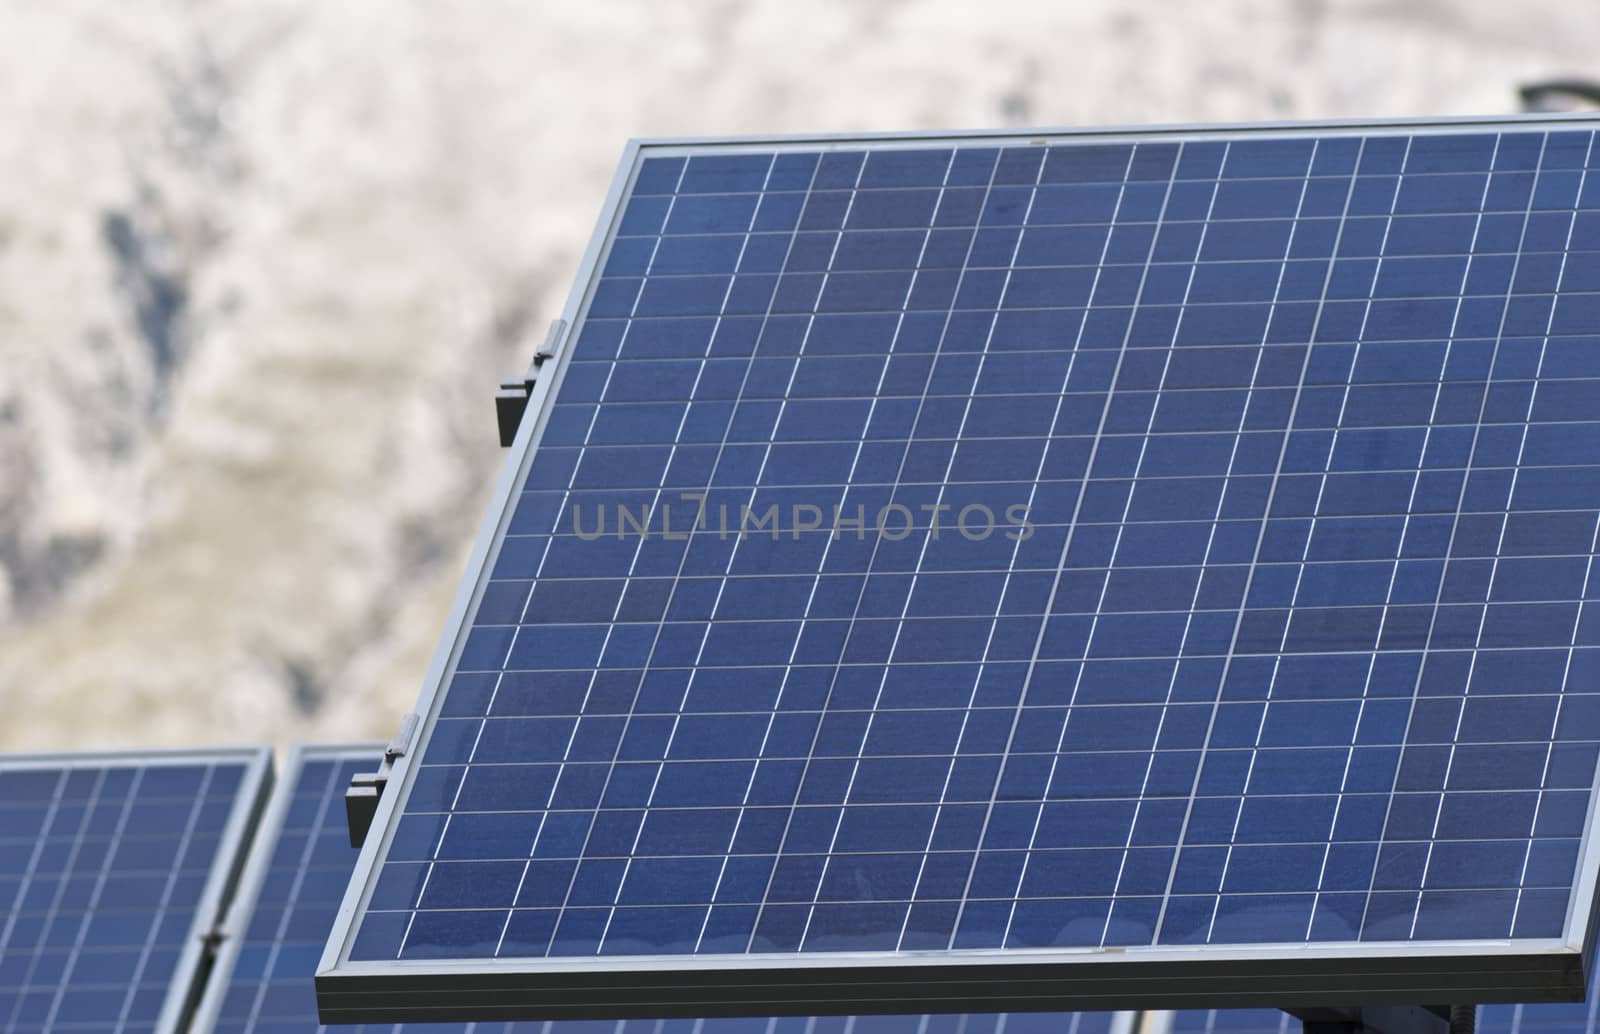 Detail of solar panels in the Madonie mountains by gandolfocannatella